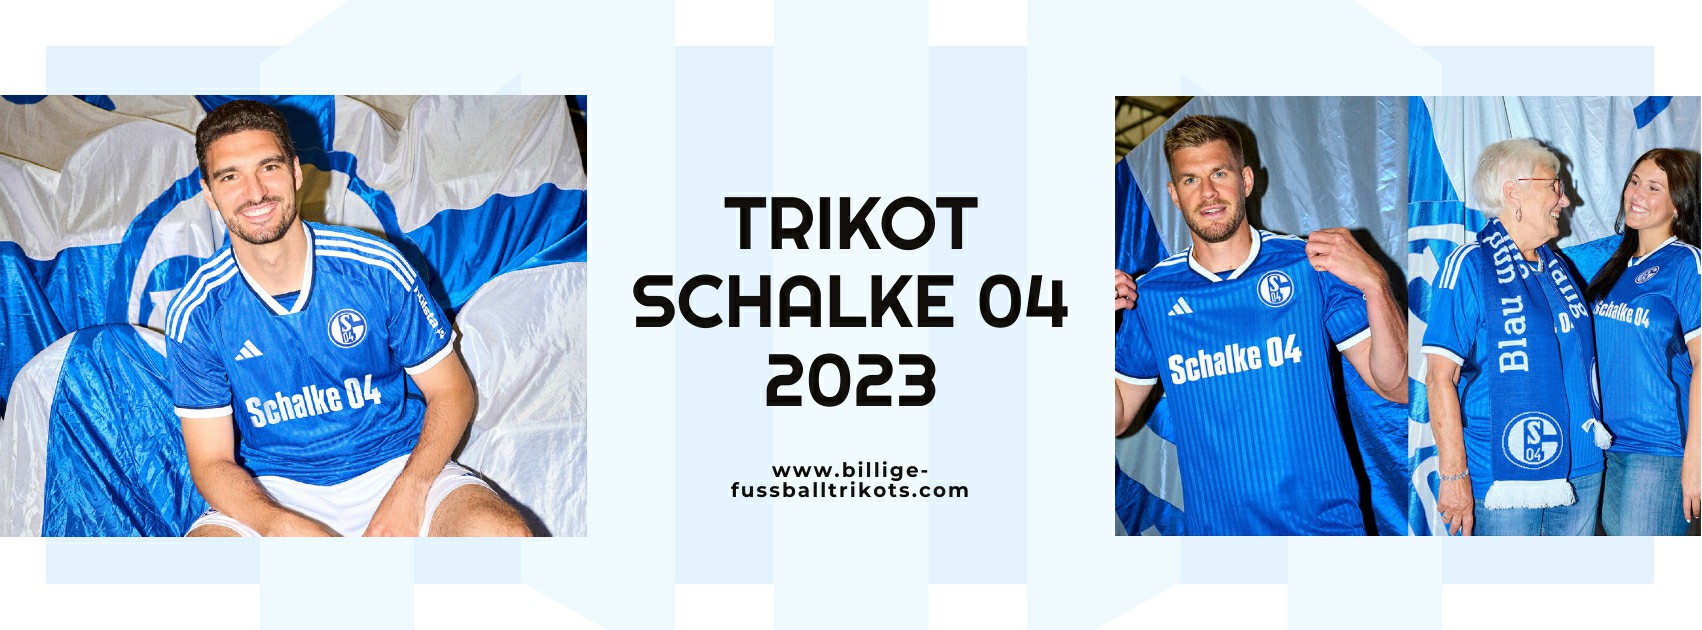 Schalke 04 Trikot 2023-2024